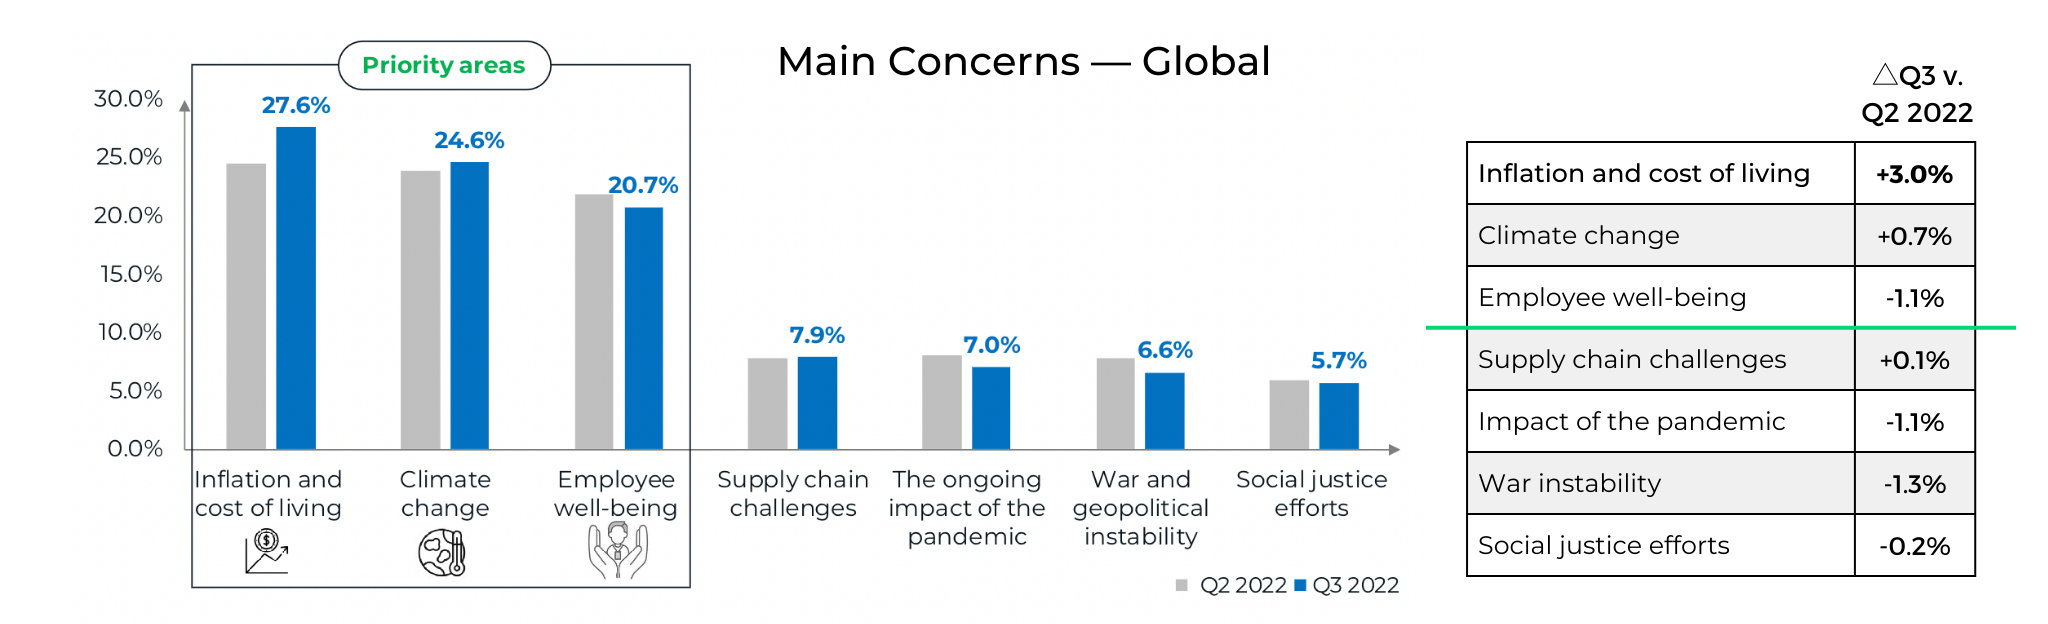 Main Concerns - Global